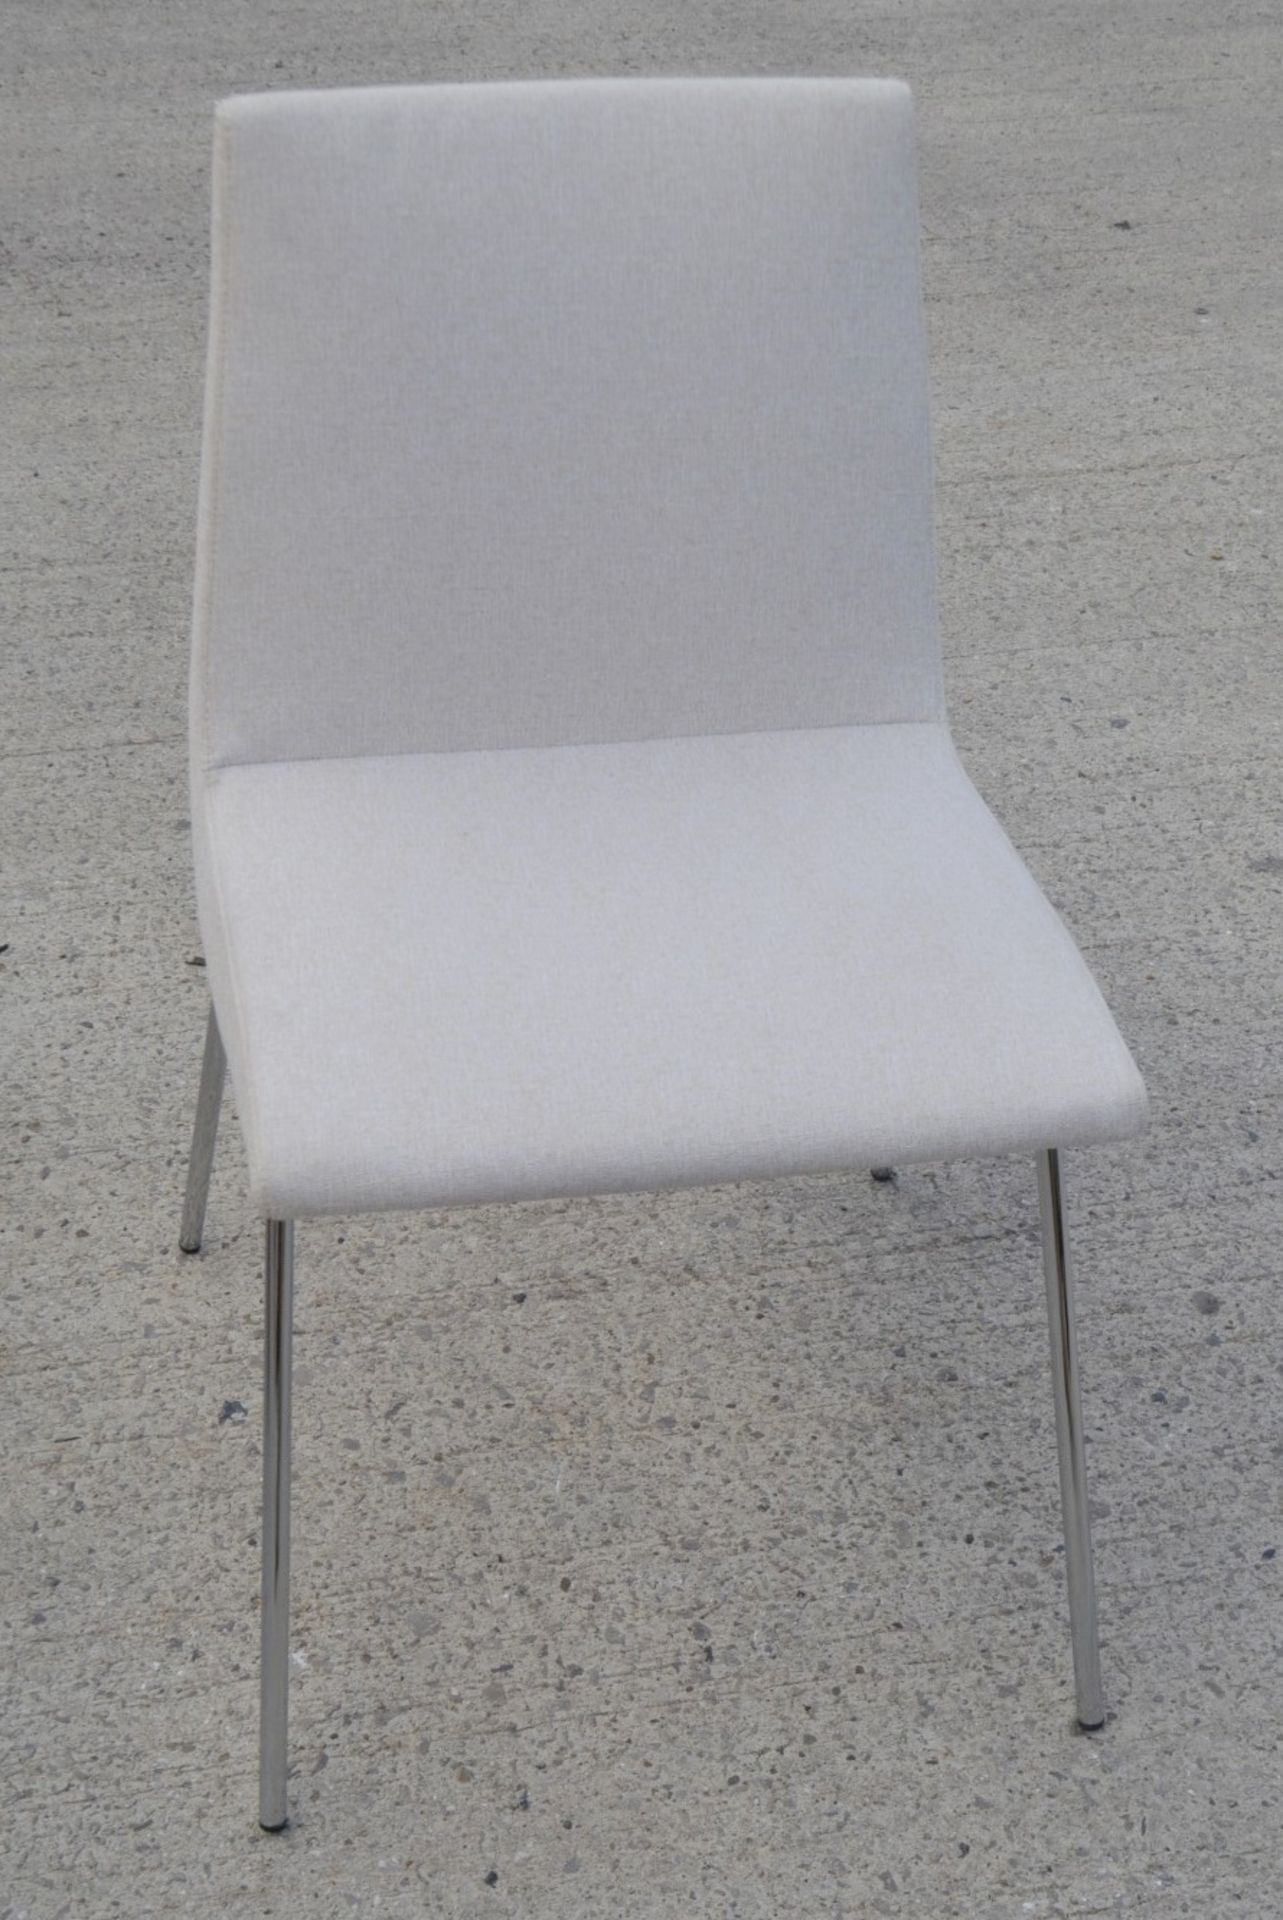 Pair Of LIGNE ROSET 'TV' Designer Dining Chairs In A Light Neutral Beige Fabric & Chromed Steel Legs - Image 9 of 9